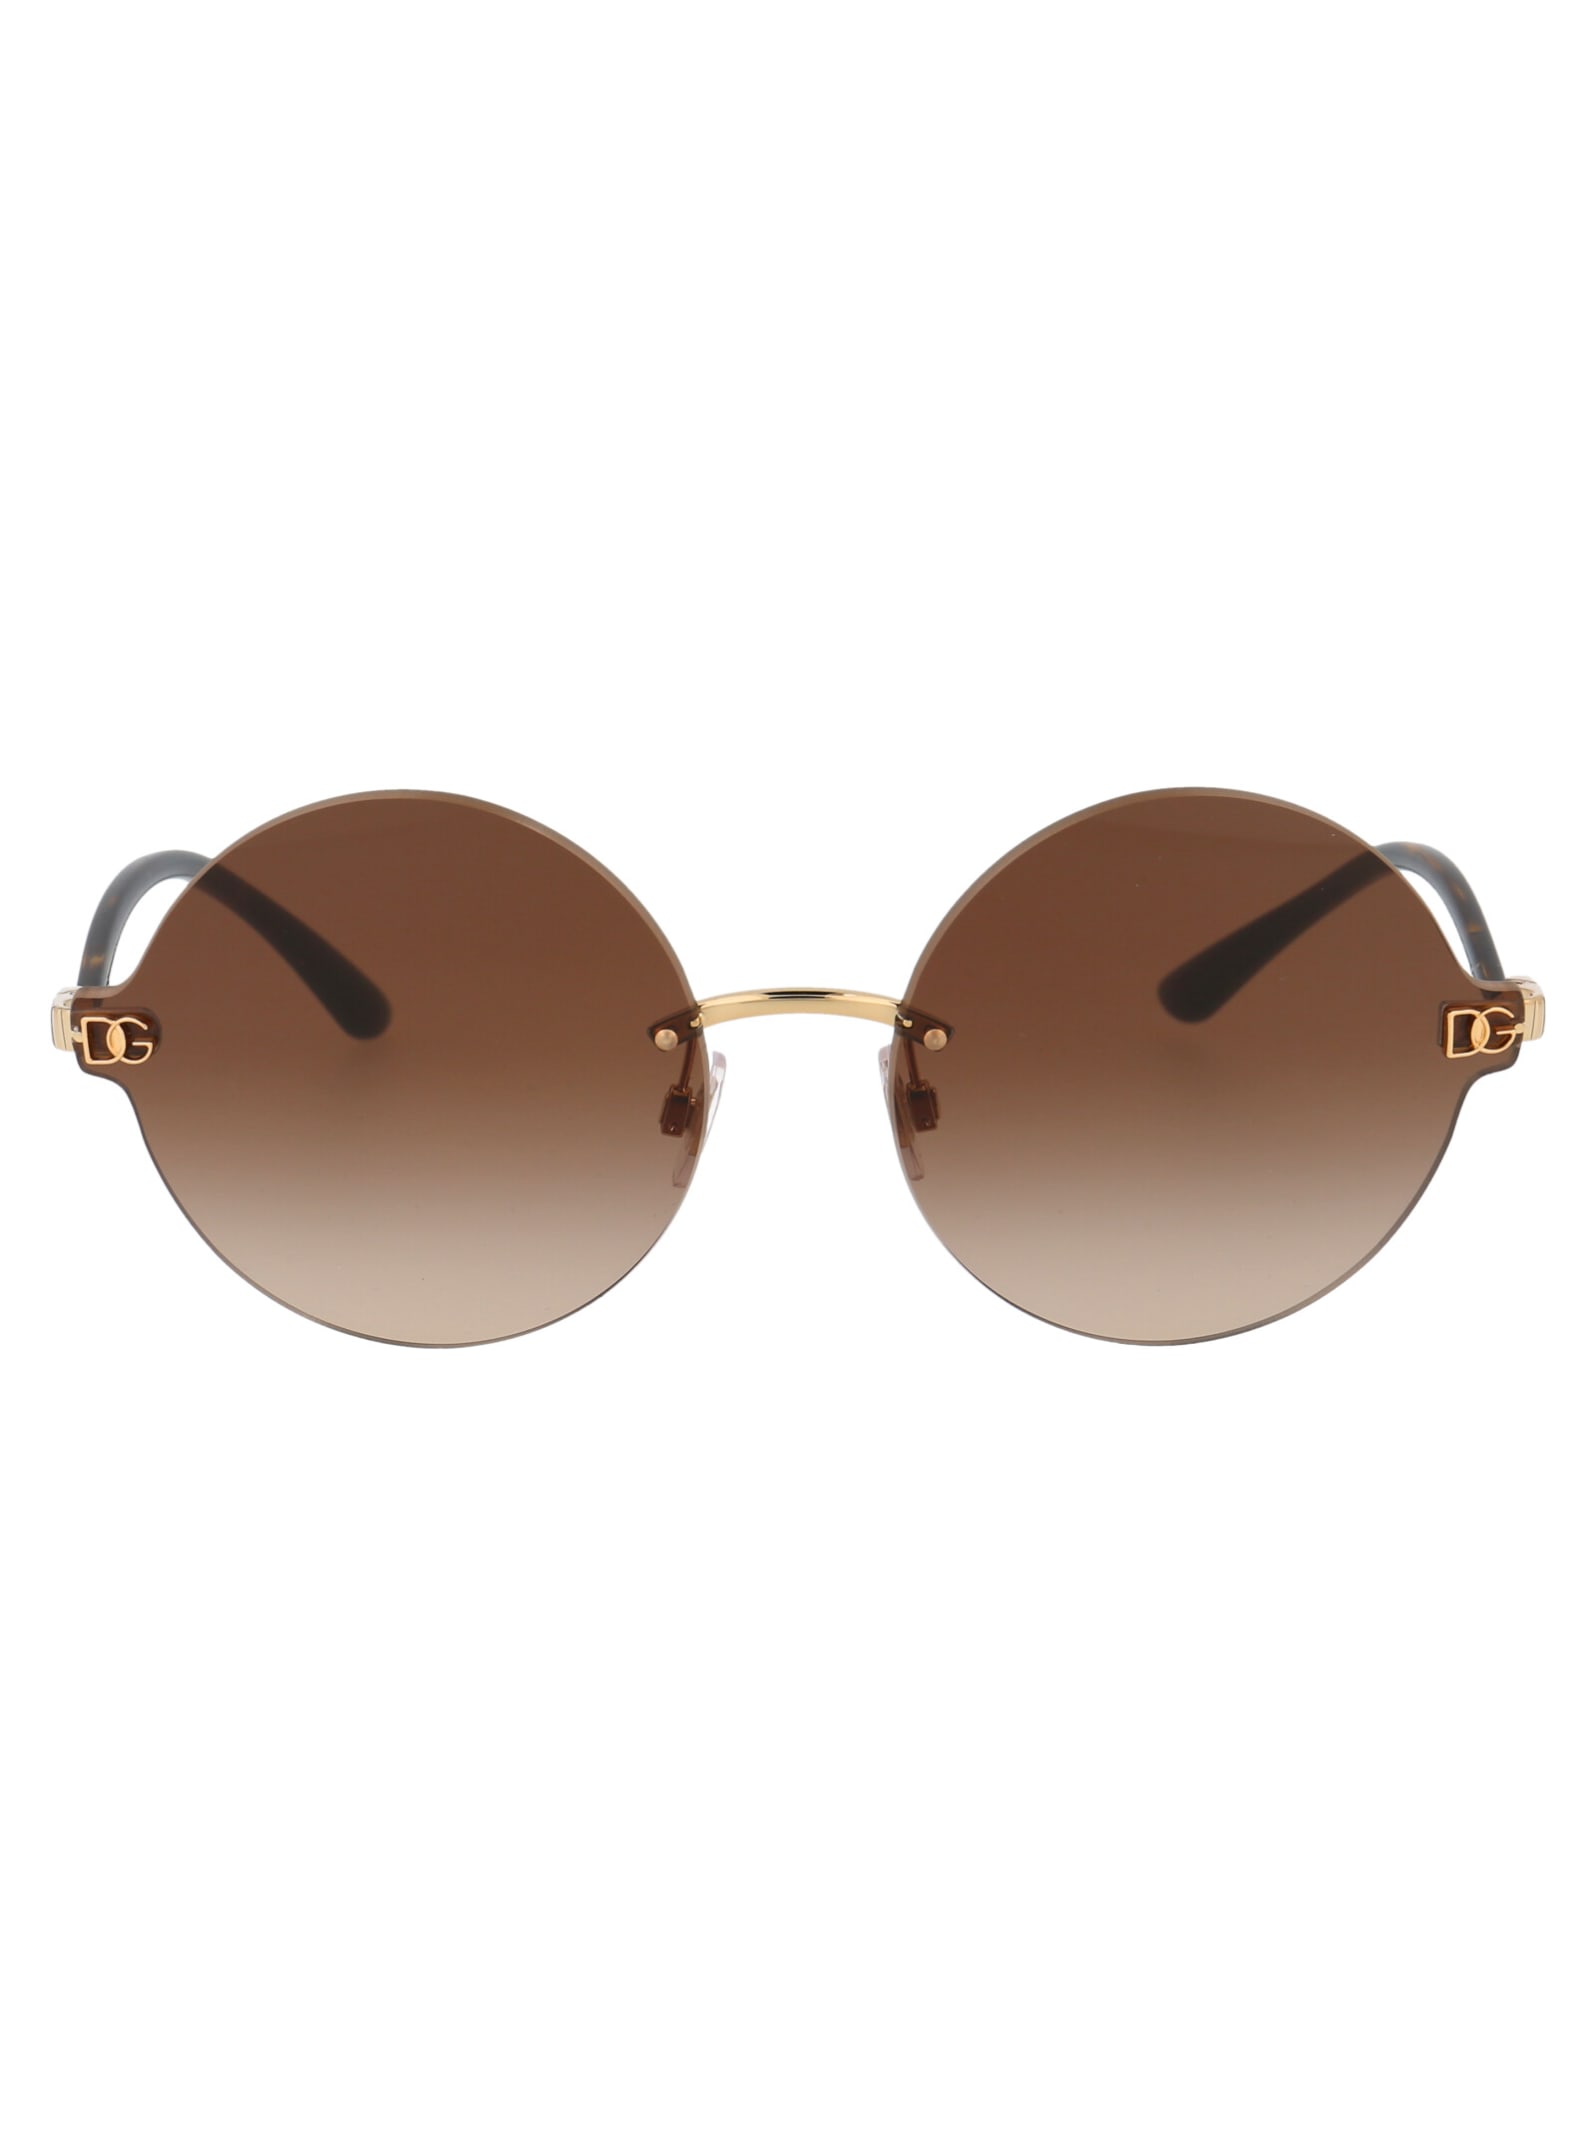 Dolce & Gabbana 0dg2269 Sunglasses